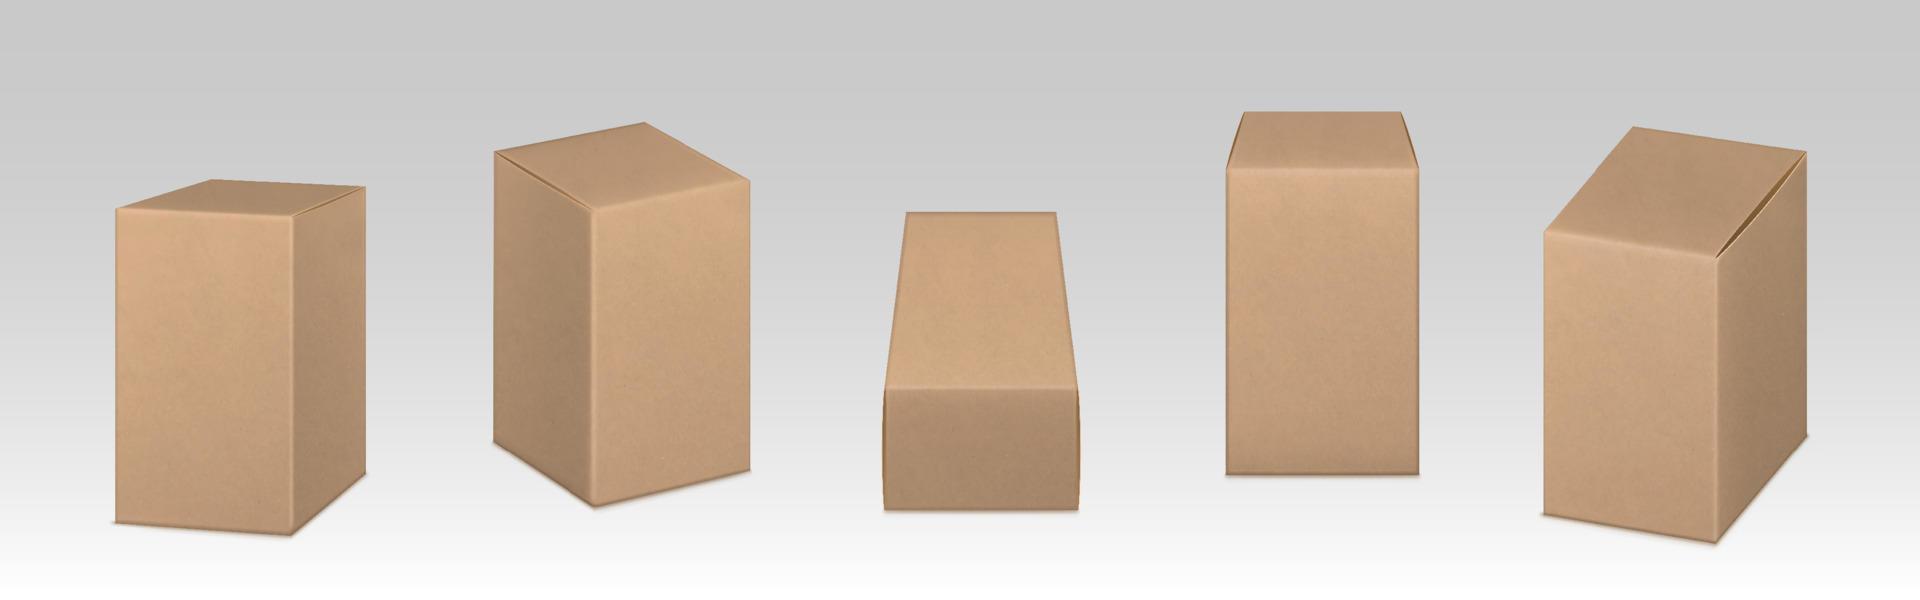 doos model, ambacht eco pakket, bruin containers vector